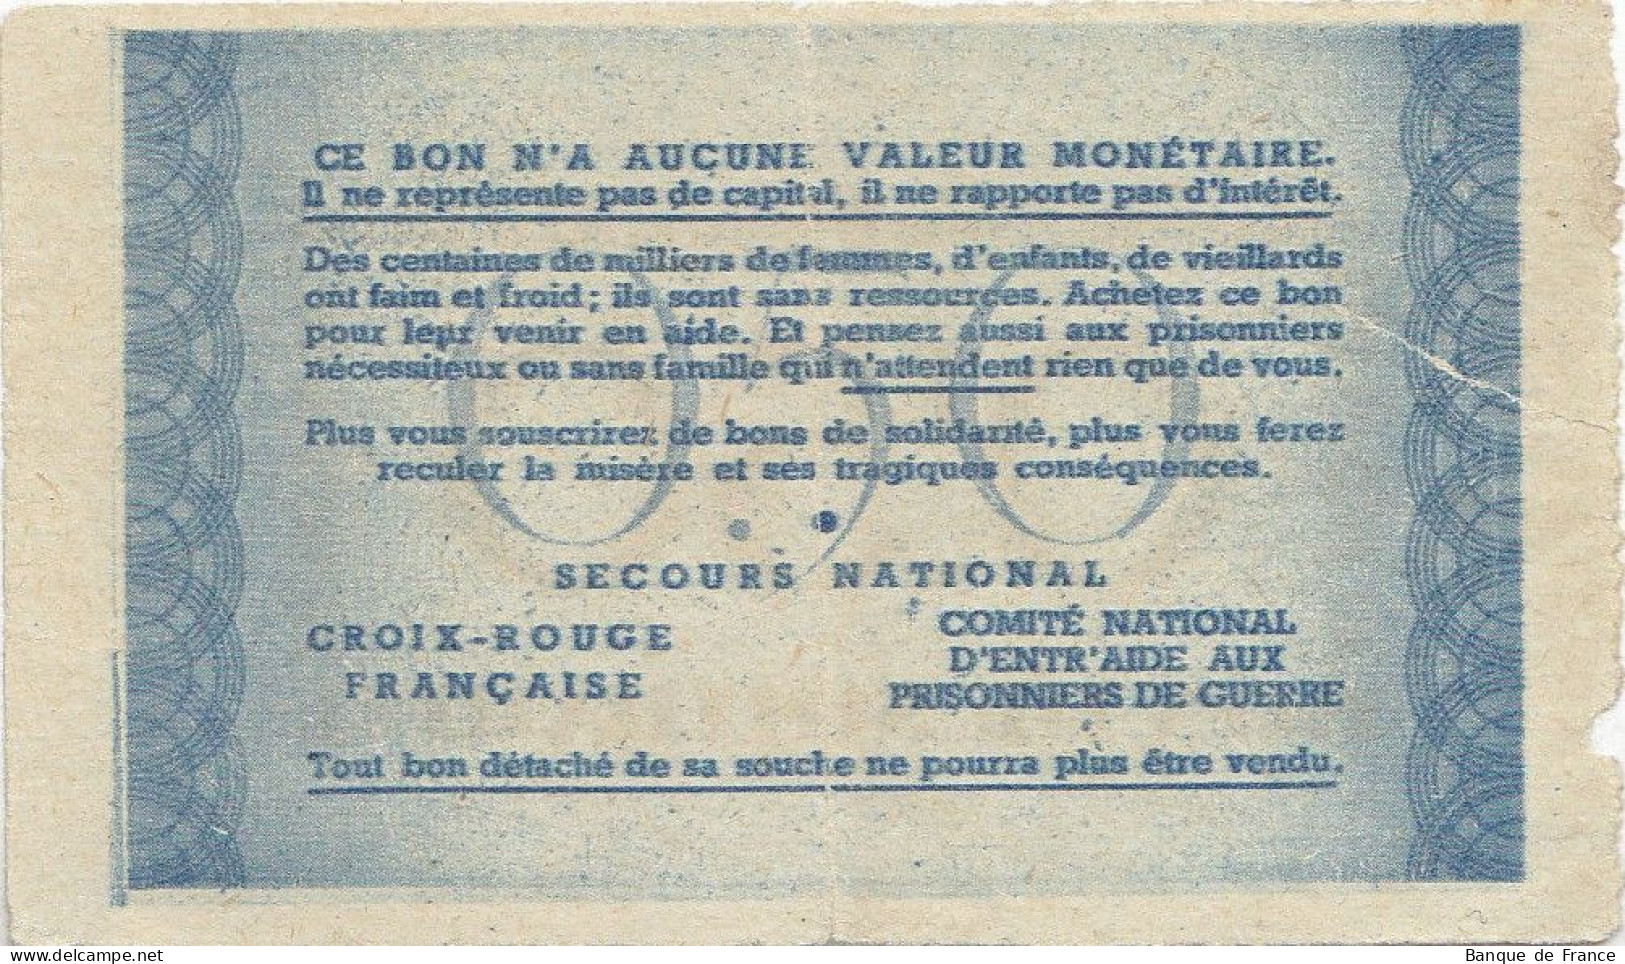 Bon De Solidarité France 0.50 Franc - Pétain 1941 / 1942 KL.01 - Notgeld